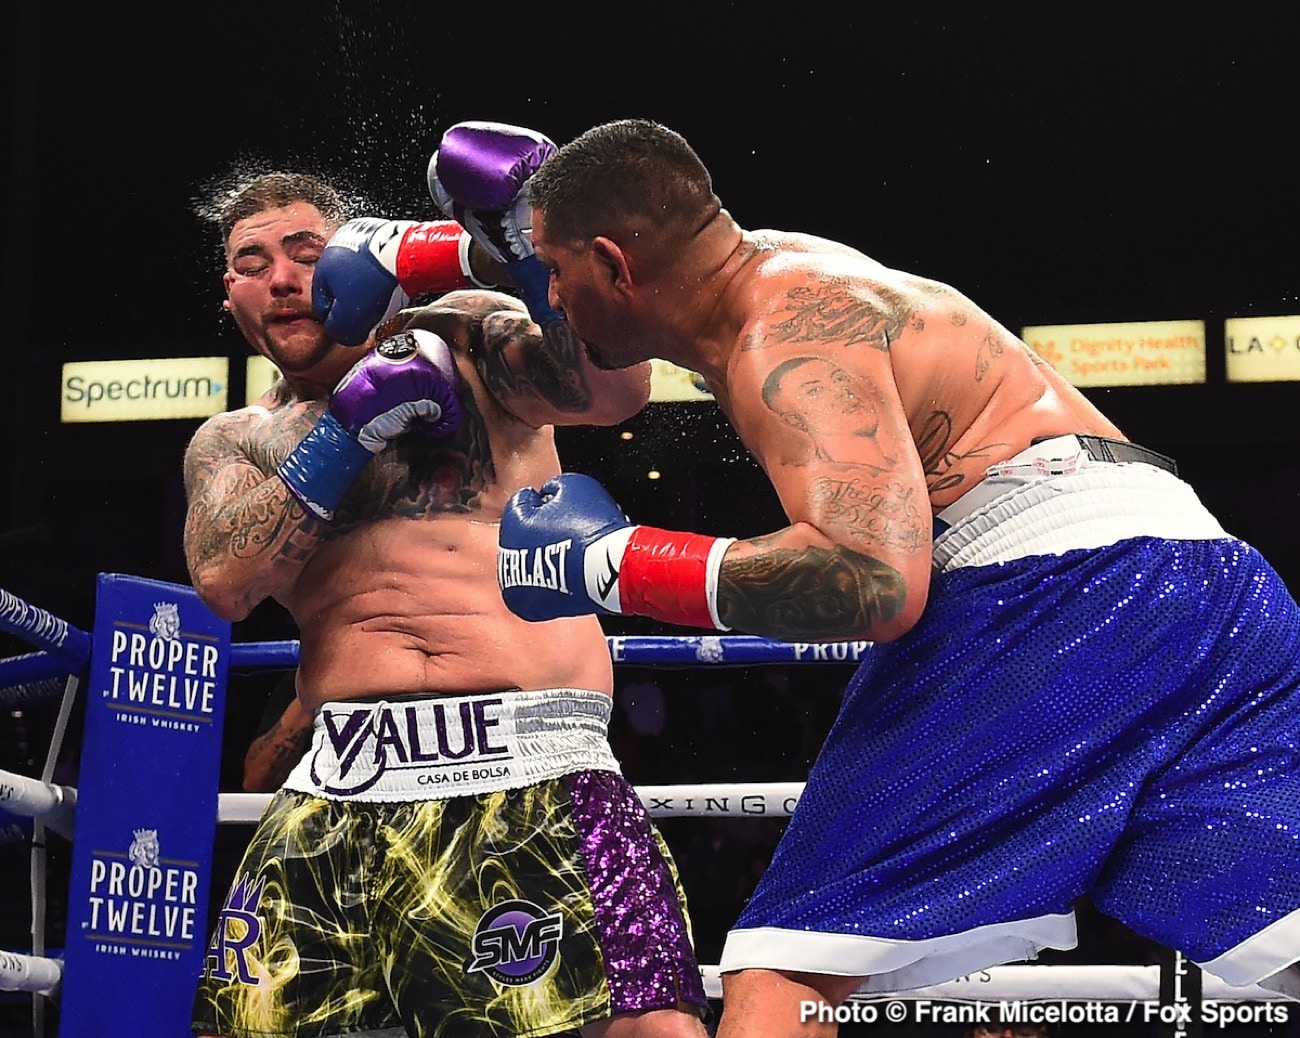 Abel Sanchez, Andy Ruiz Jr, Deontay Wilder boxing image / photo